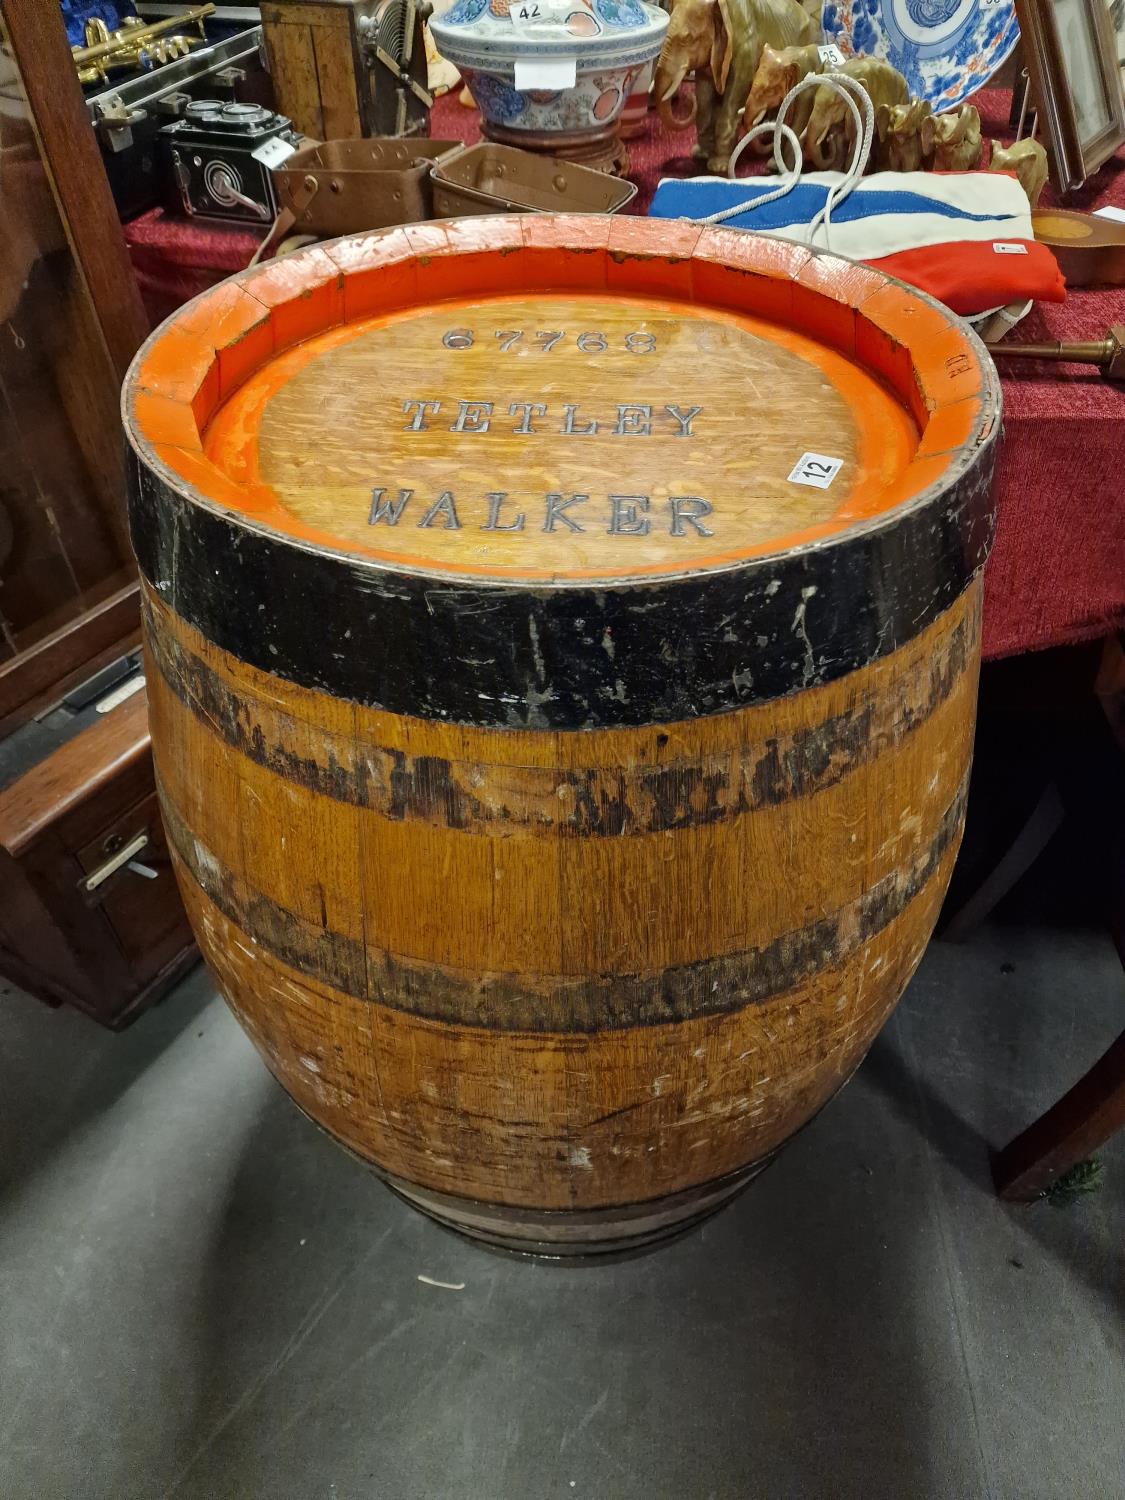 Original Tetley Walker 67768 Beer Barrel - 83cm high - Breweriana Interest